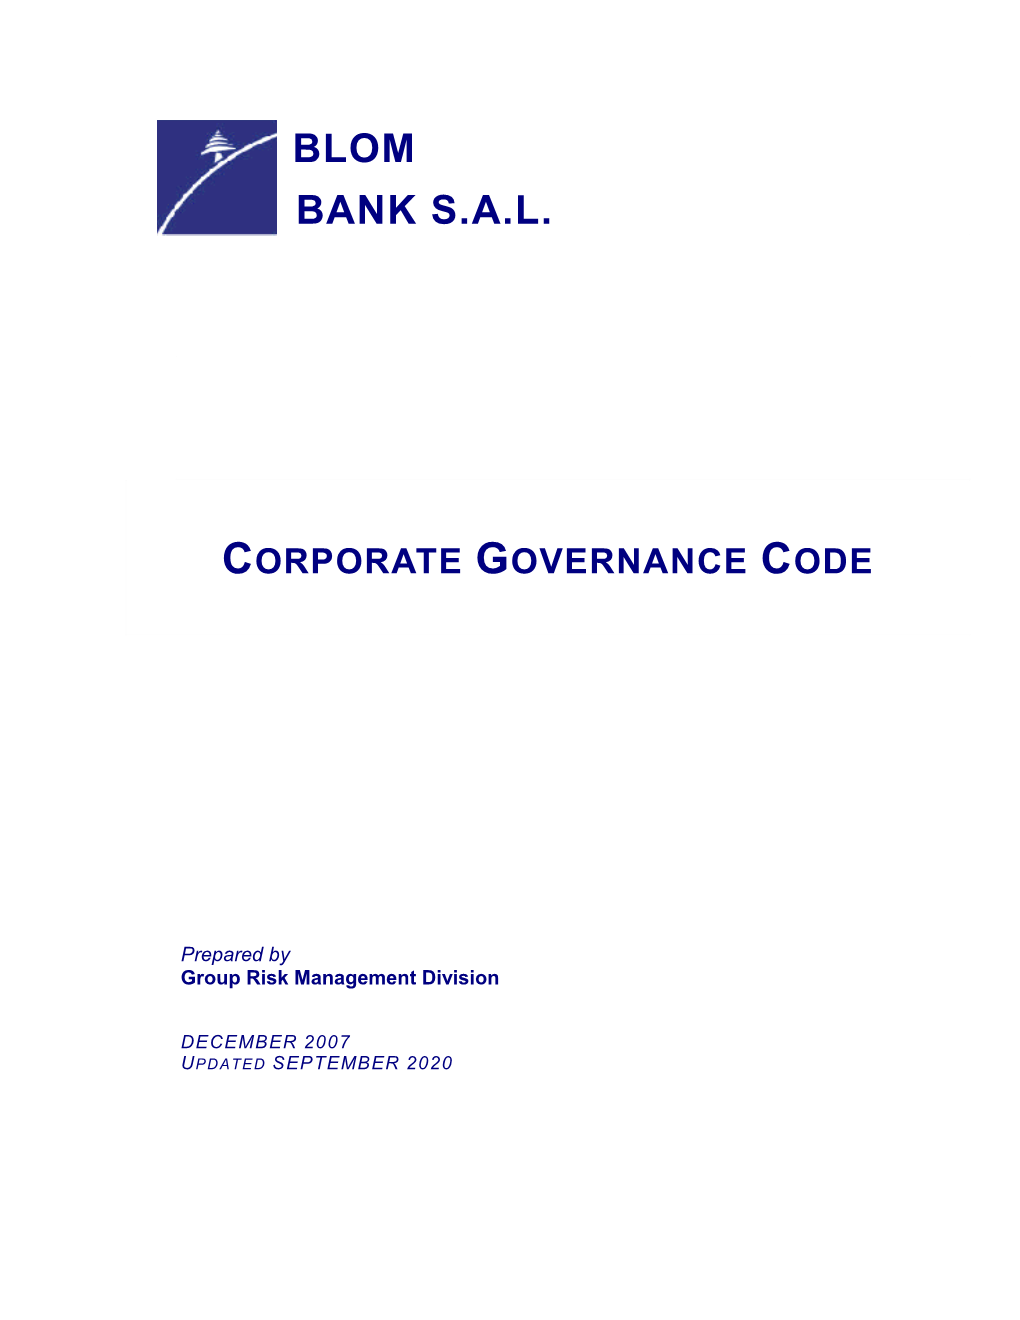 BLOM BANK's Corporate Governance Code